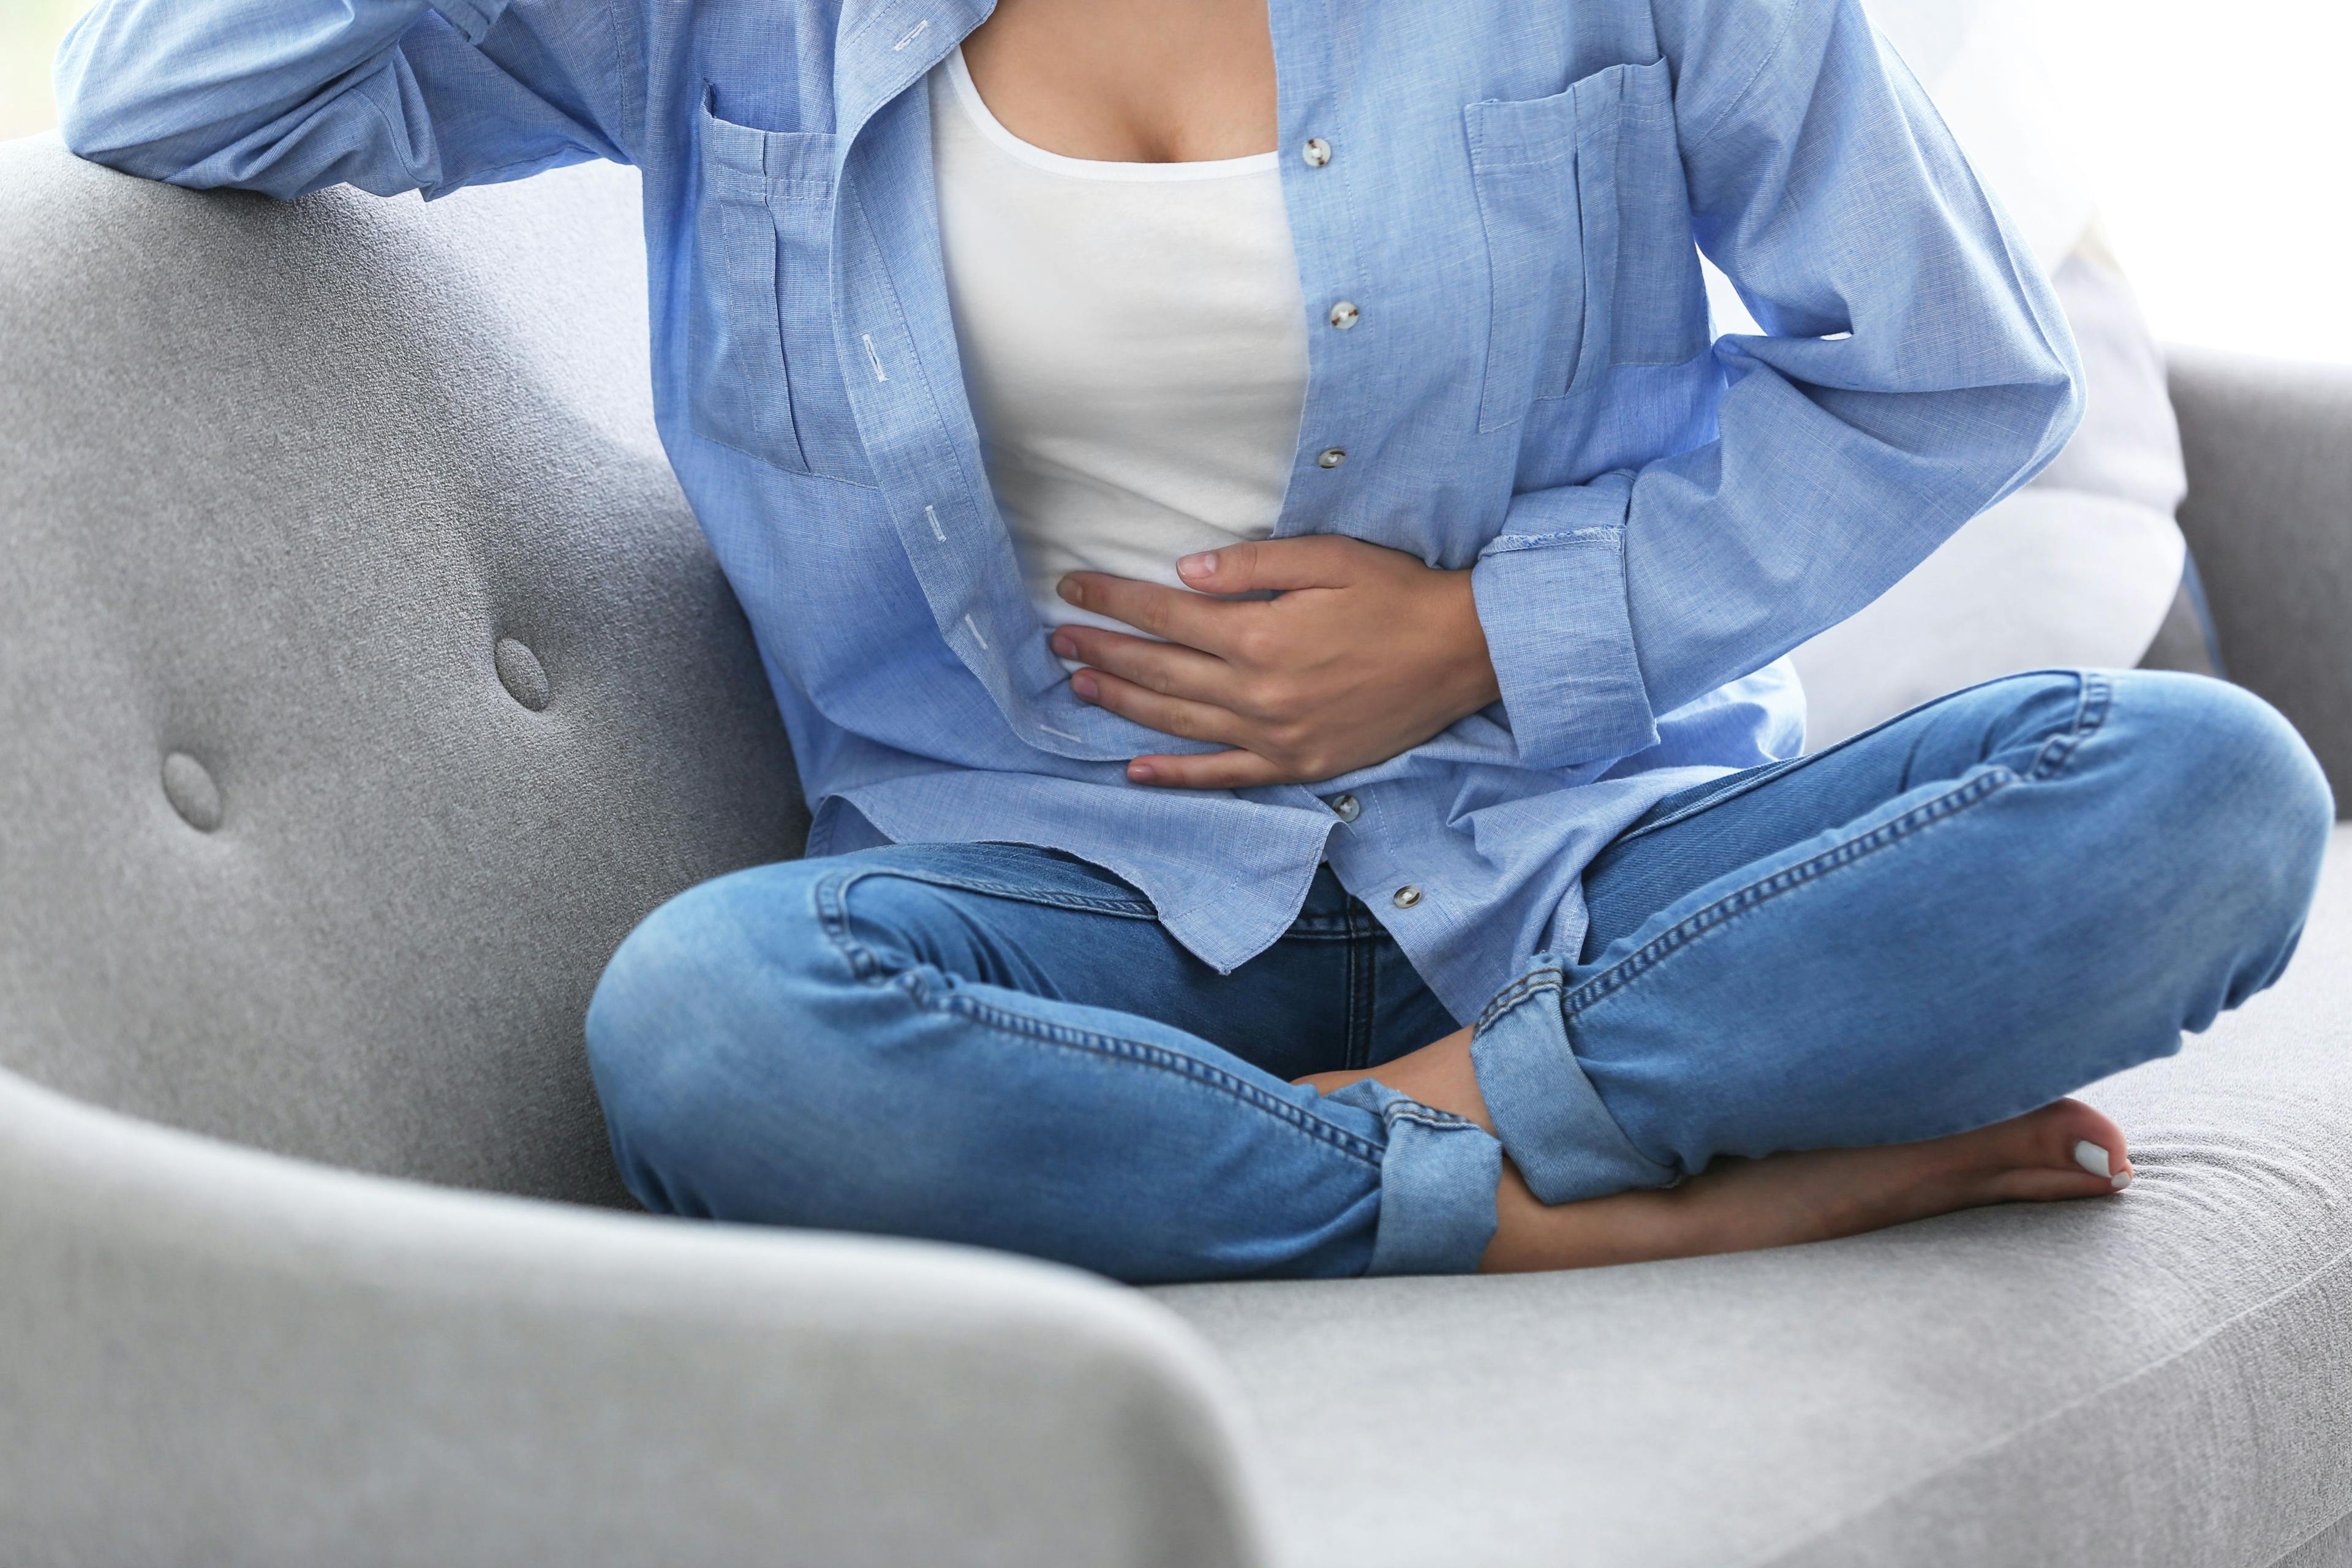 Improving fertility rates and symptoms for peritoneal endometriosis